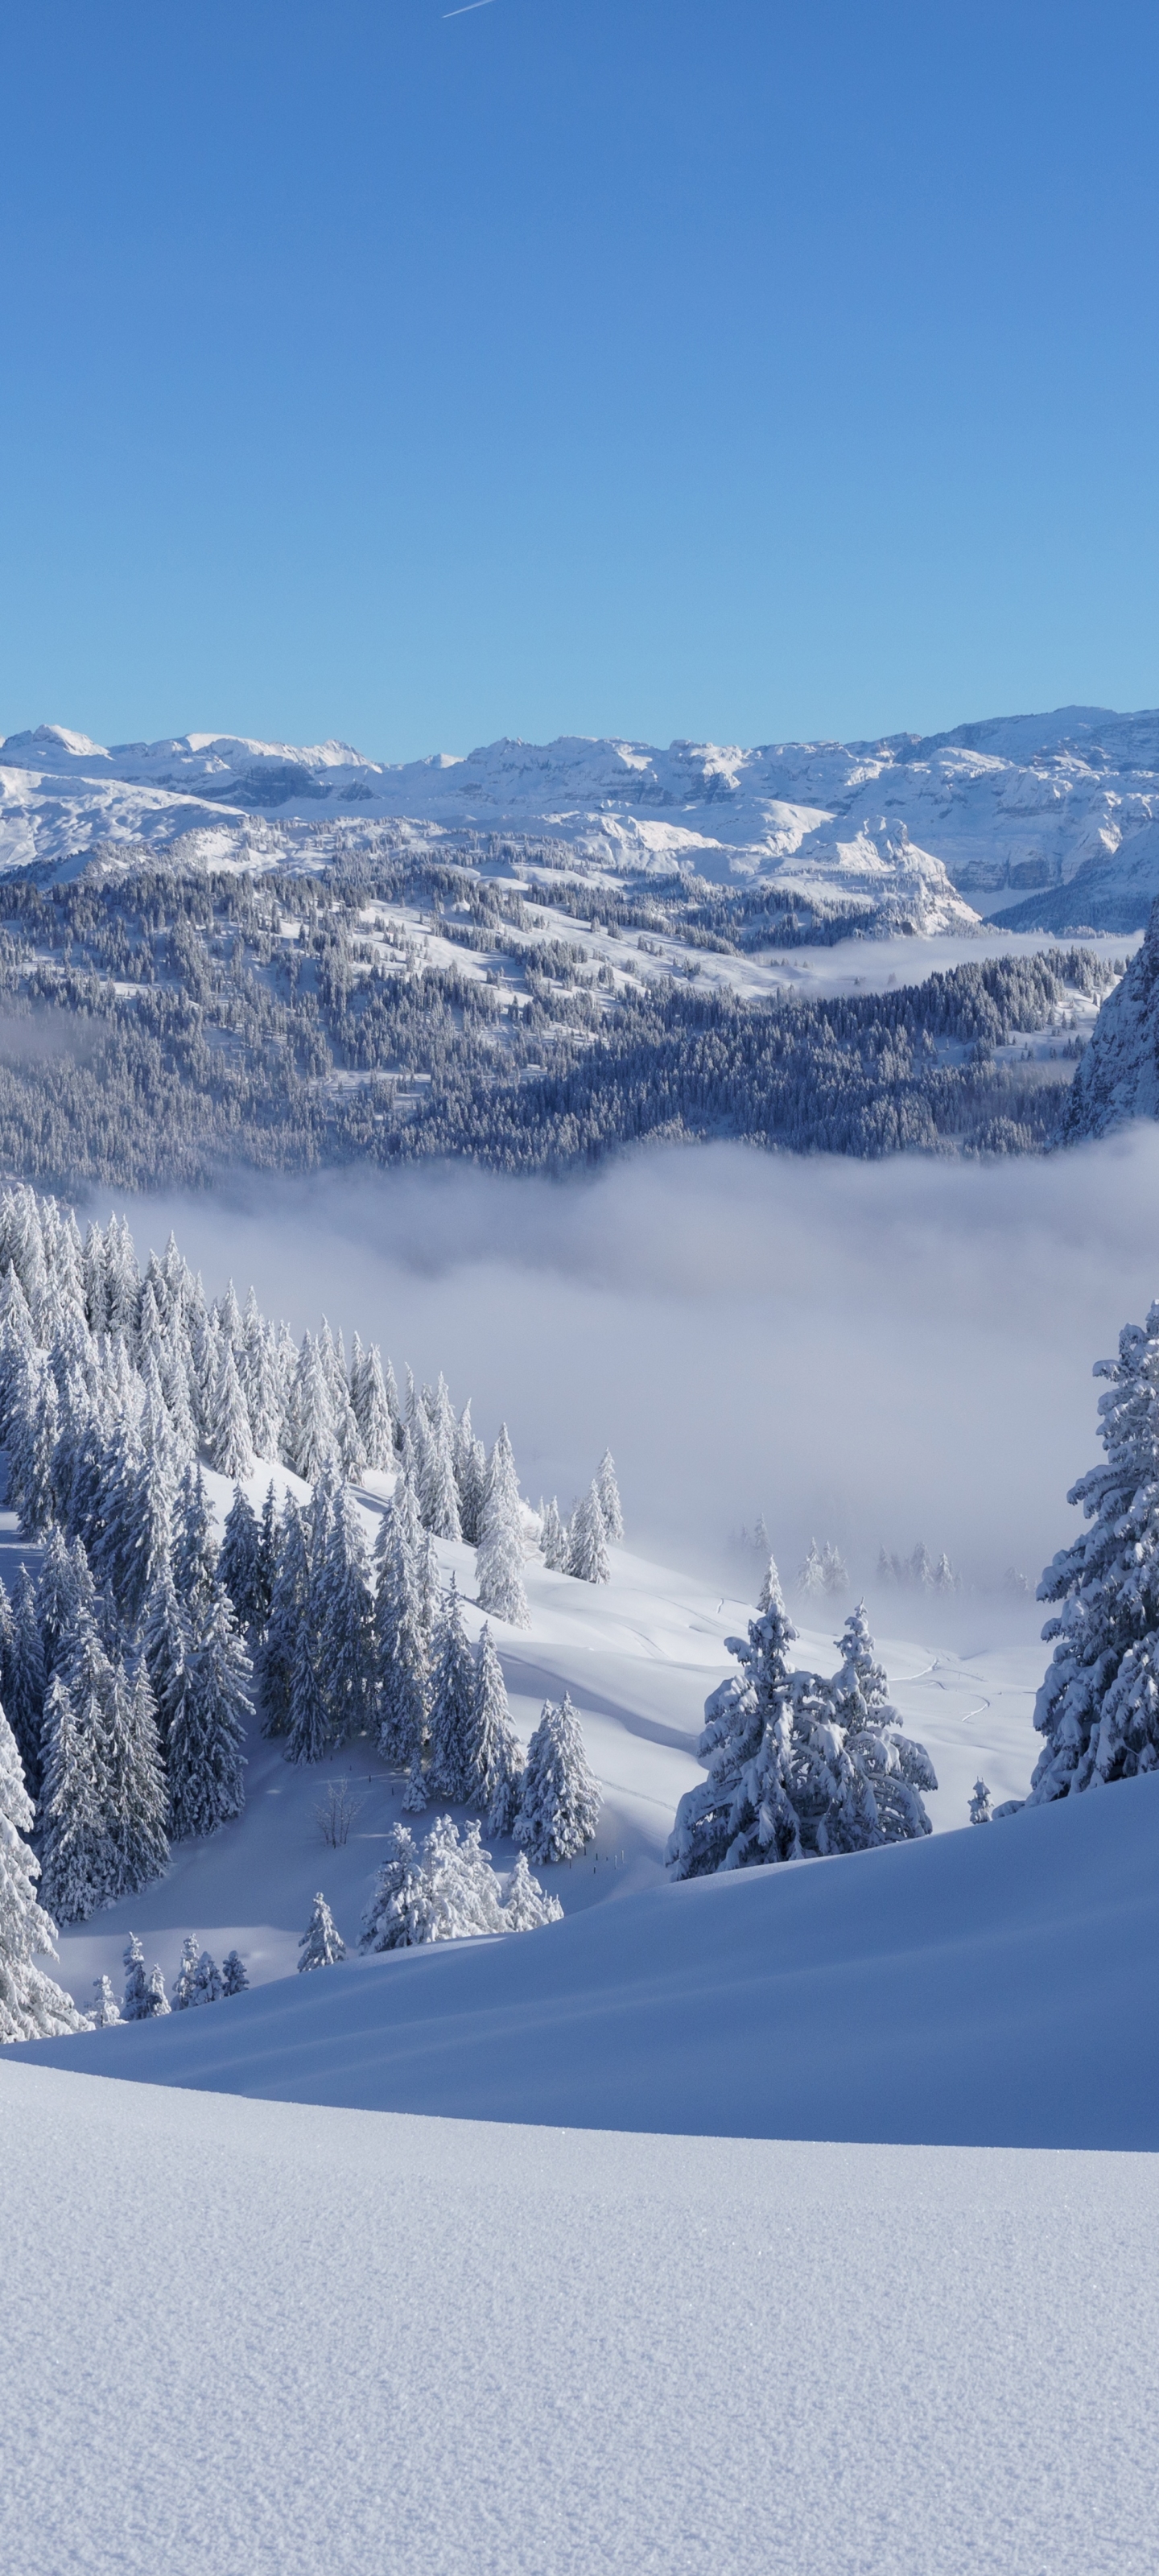 Descarga gratuita de fondo de pantalla para móvil de Invierno, Naturaleza, Montañas, Nieve, Montaña, Alpes, Suiza, Tierra/naturaleza, Los Alpes.